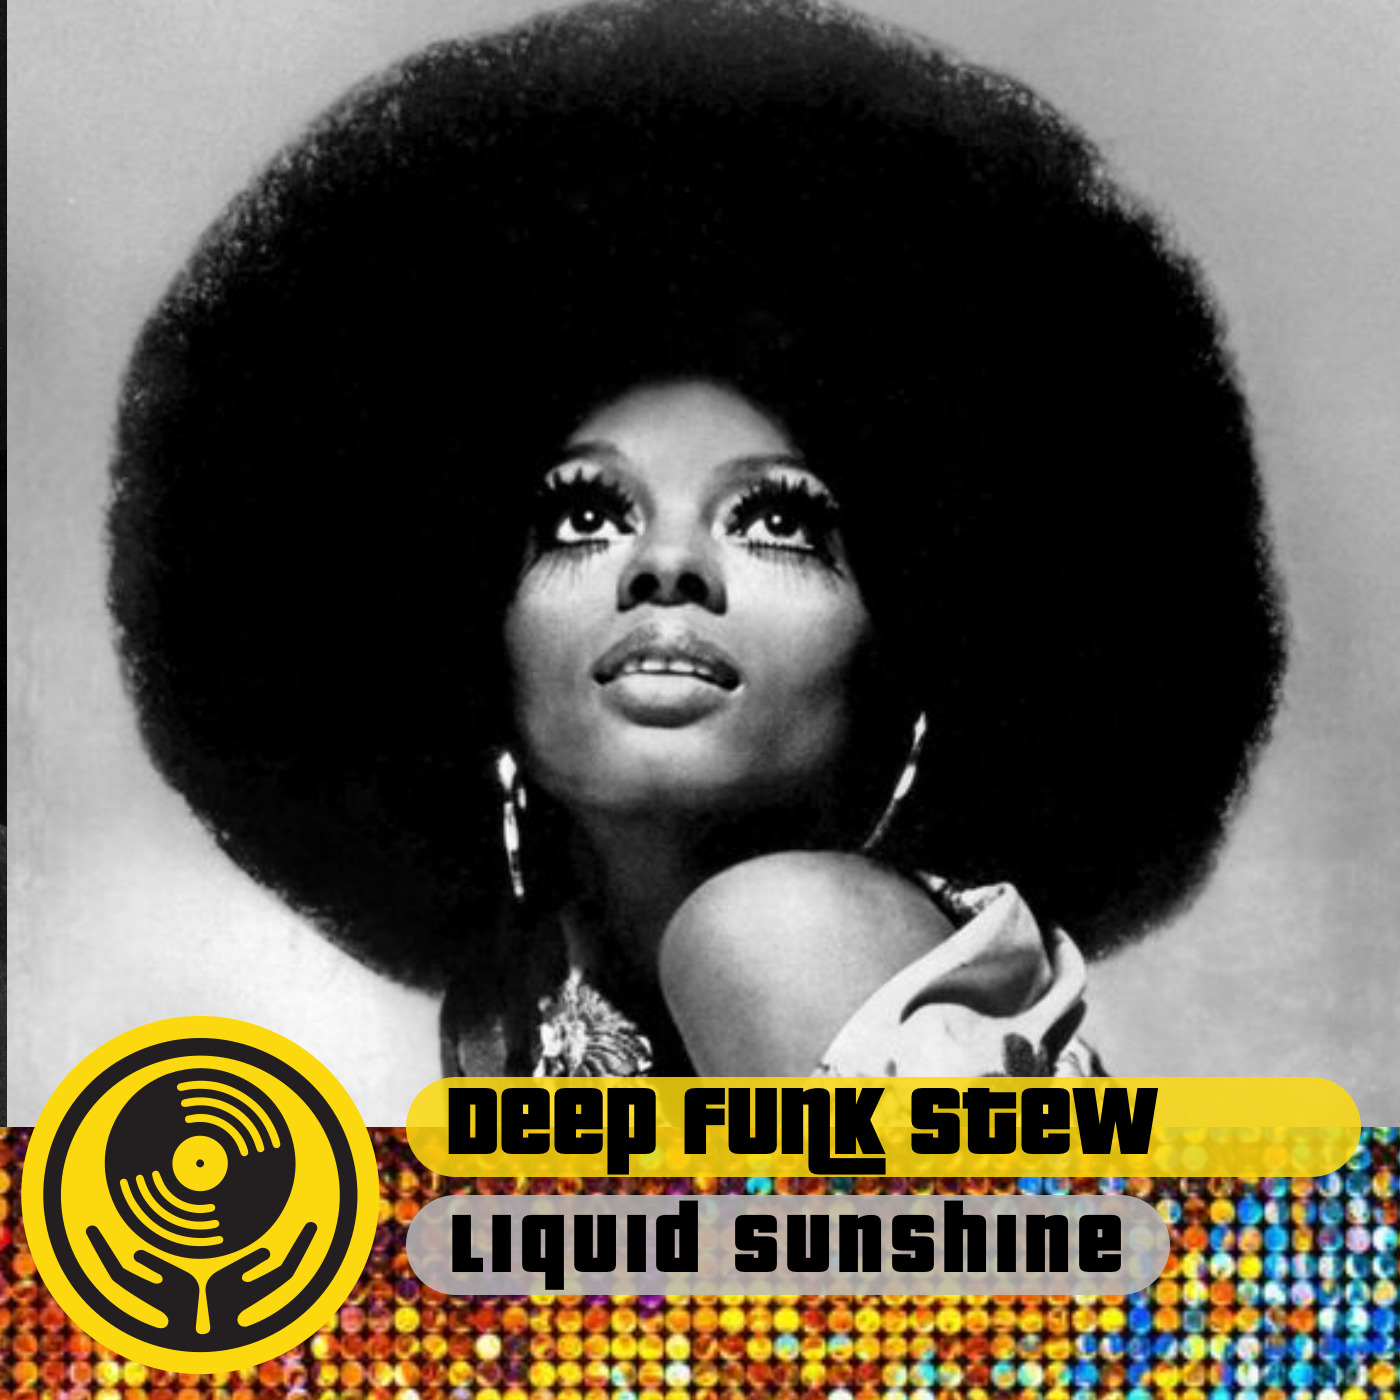 Deep Funk Soul Stew - Liquid Sunshine @ The Face Radio